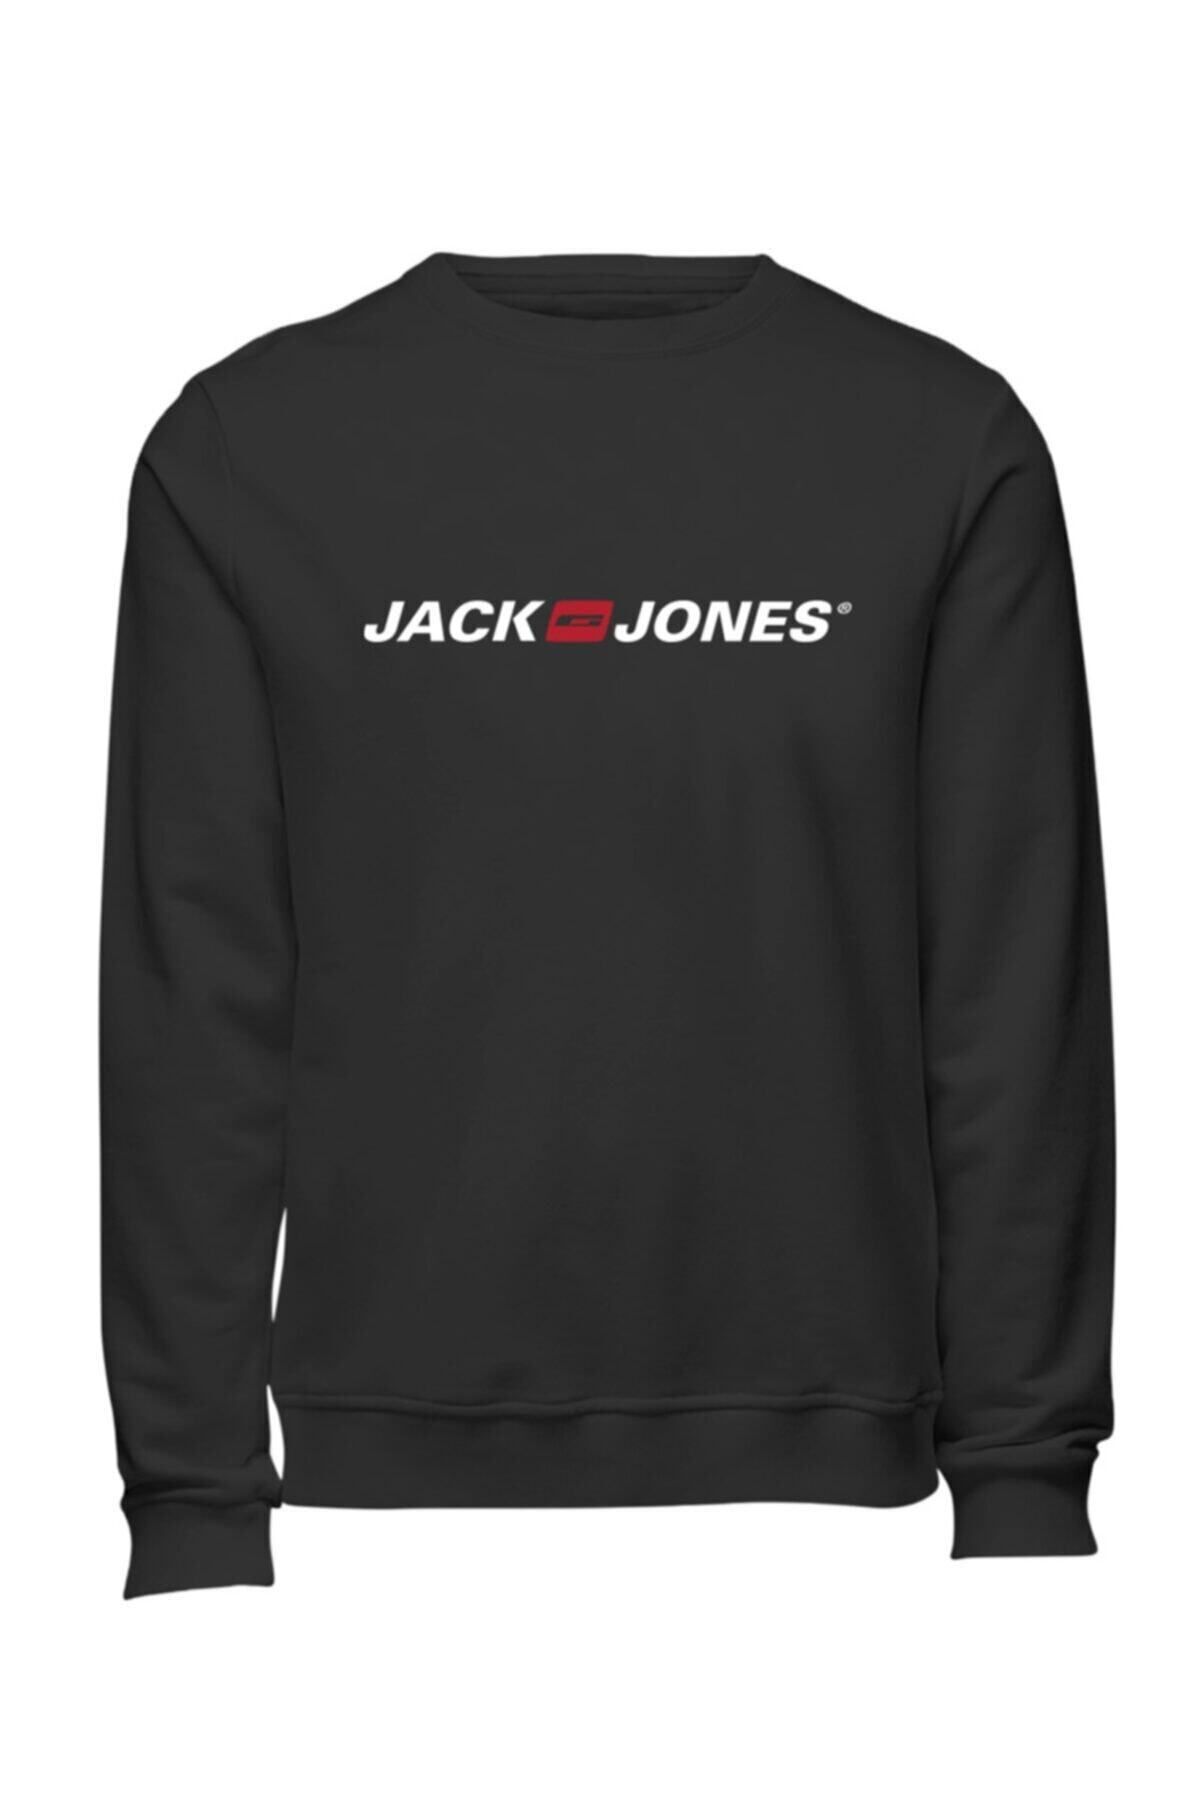 Jack & Jones Erkek Si?yah Sweatshirt 12190771-siyah